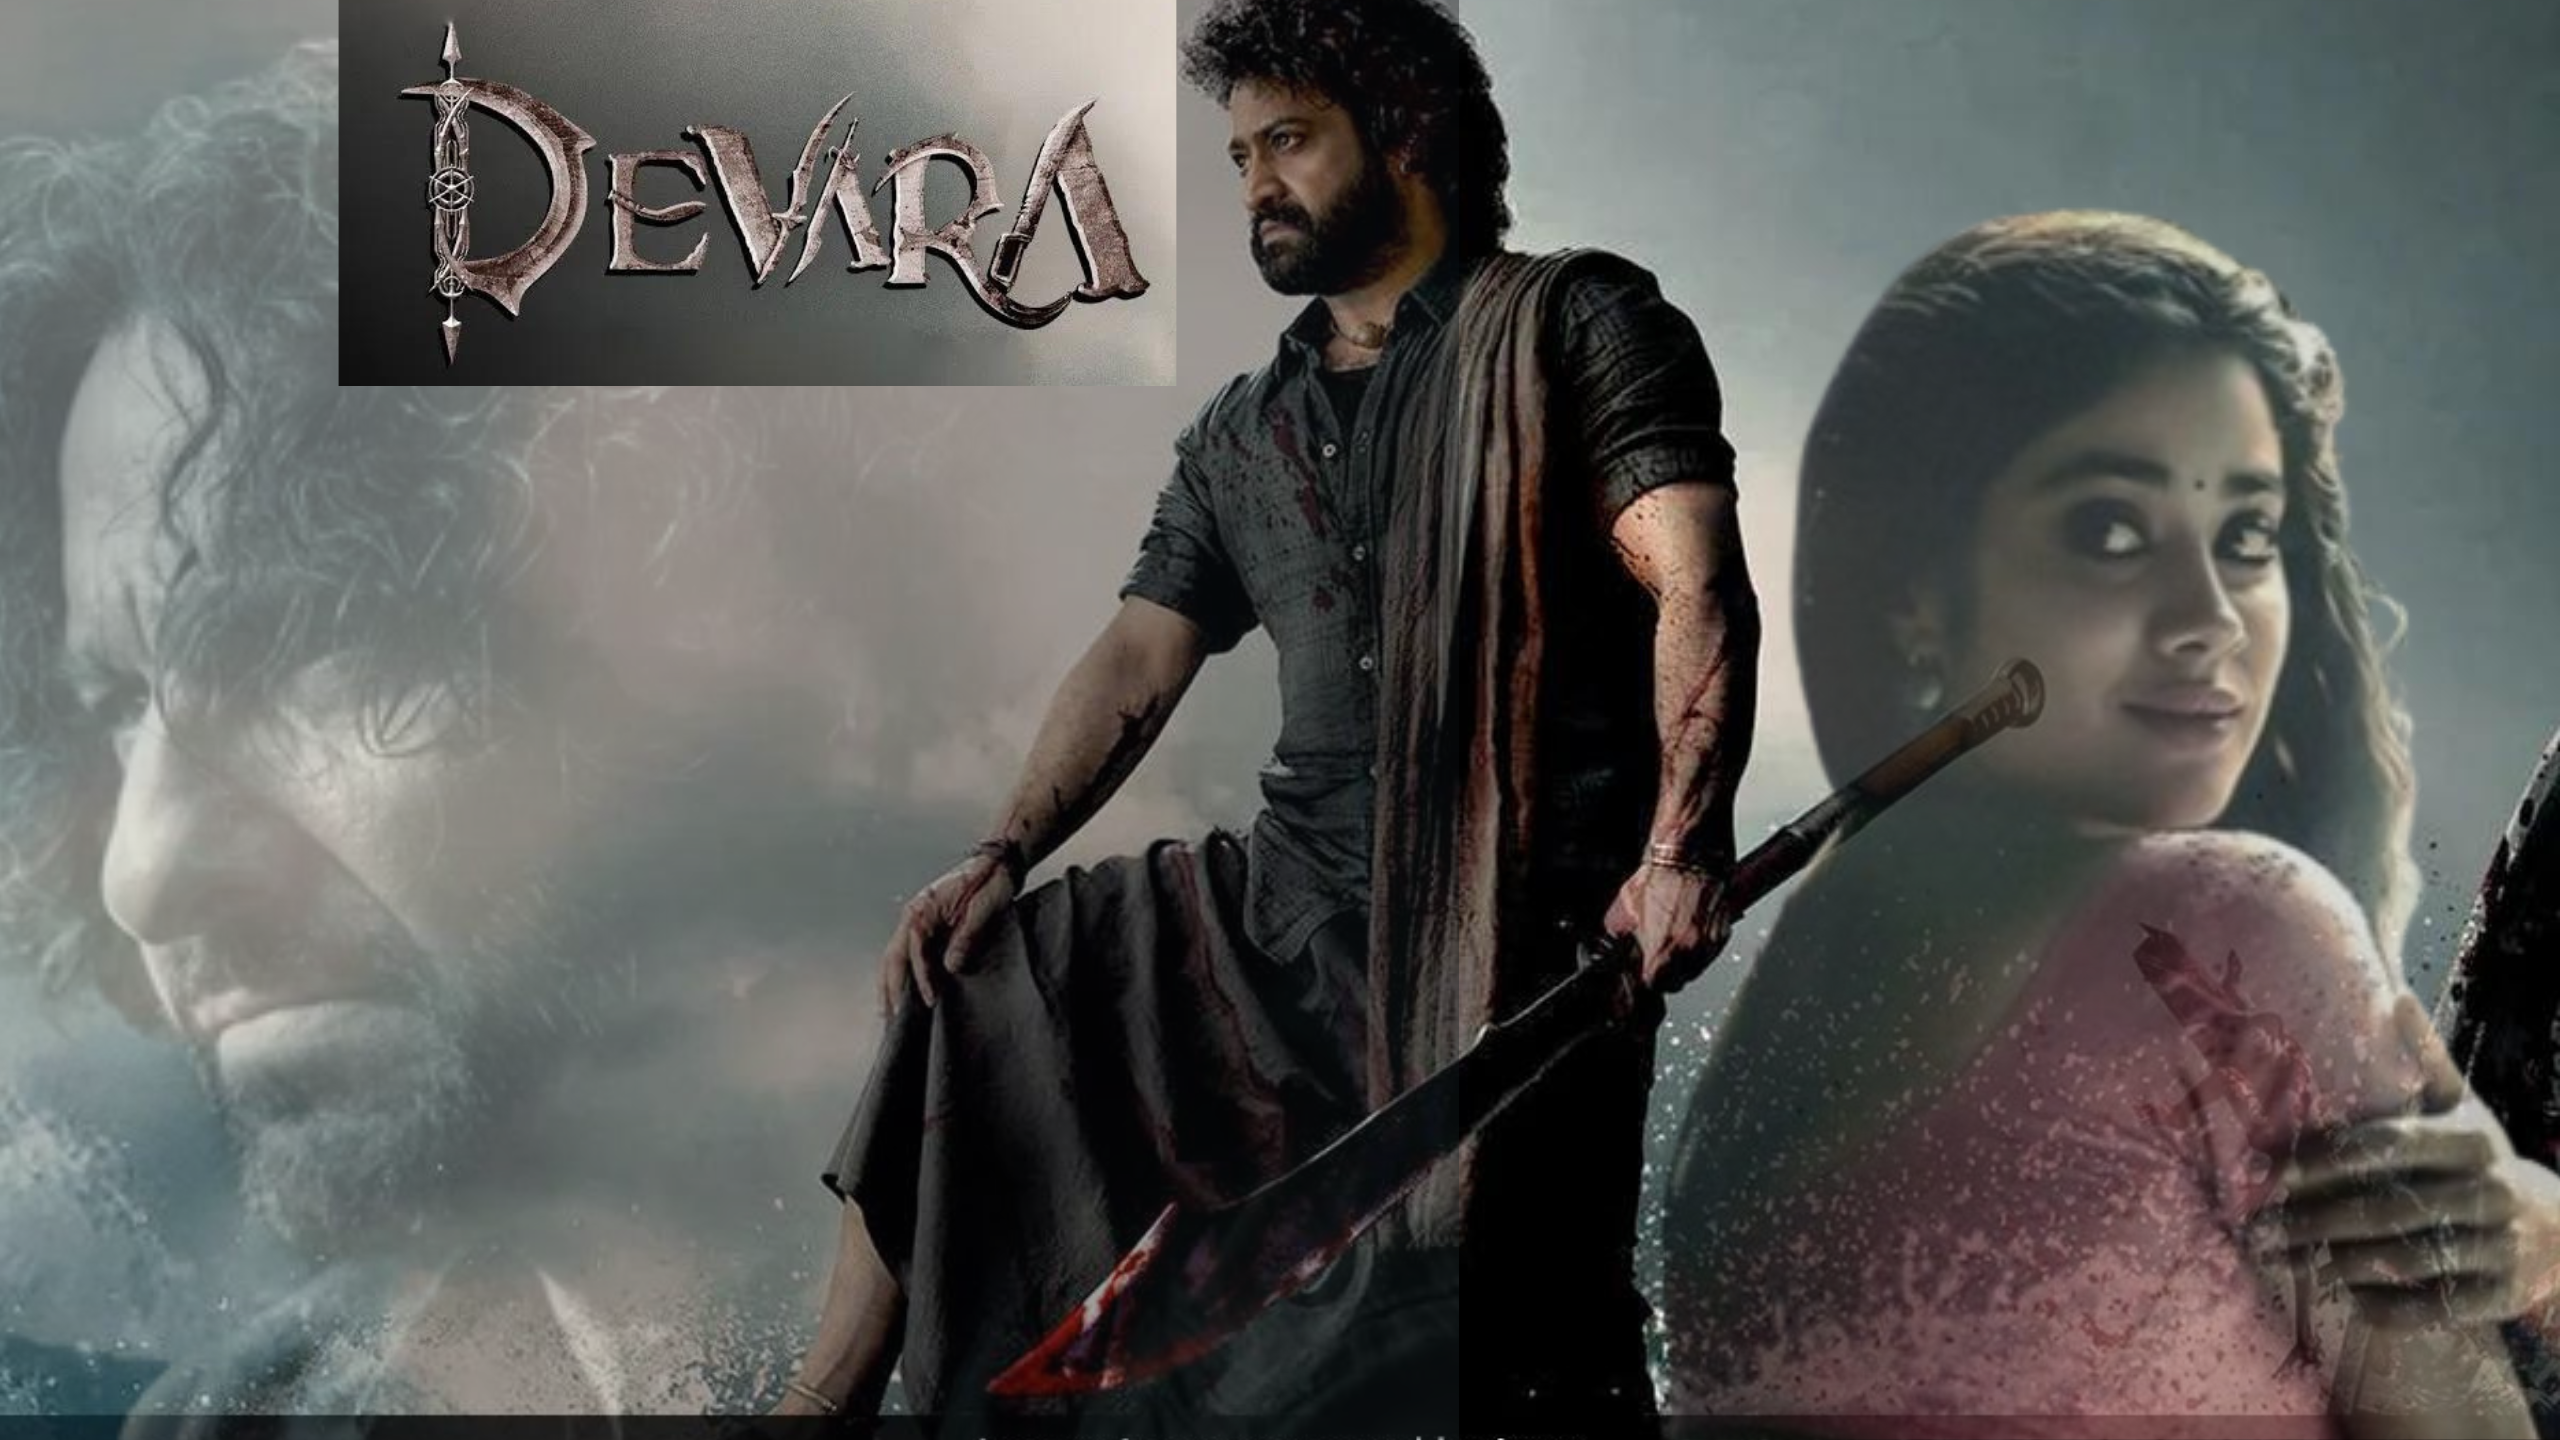 “Devara: Part 1 – A Cinematic Journey Begins”